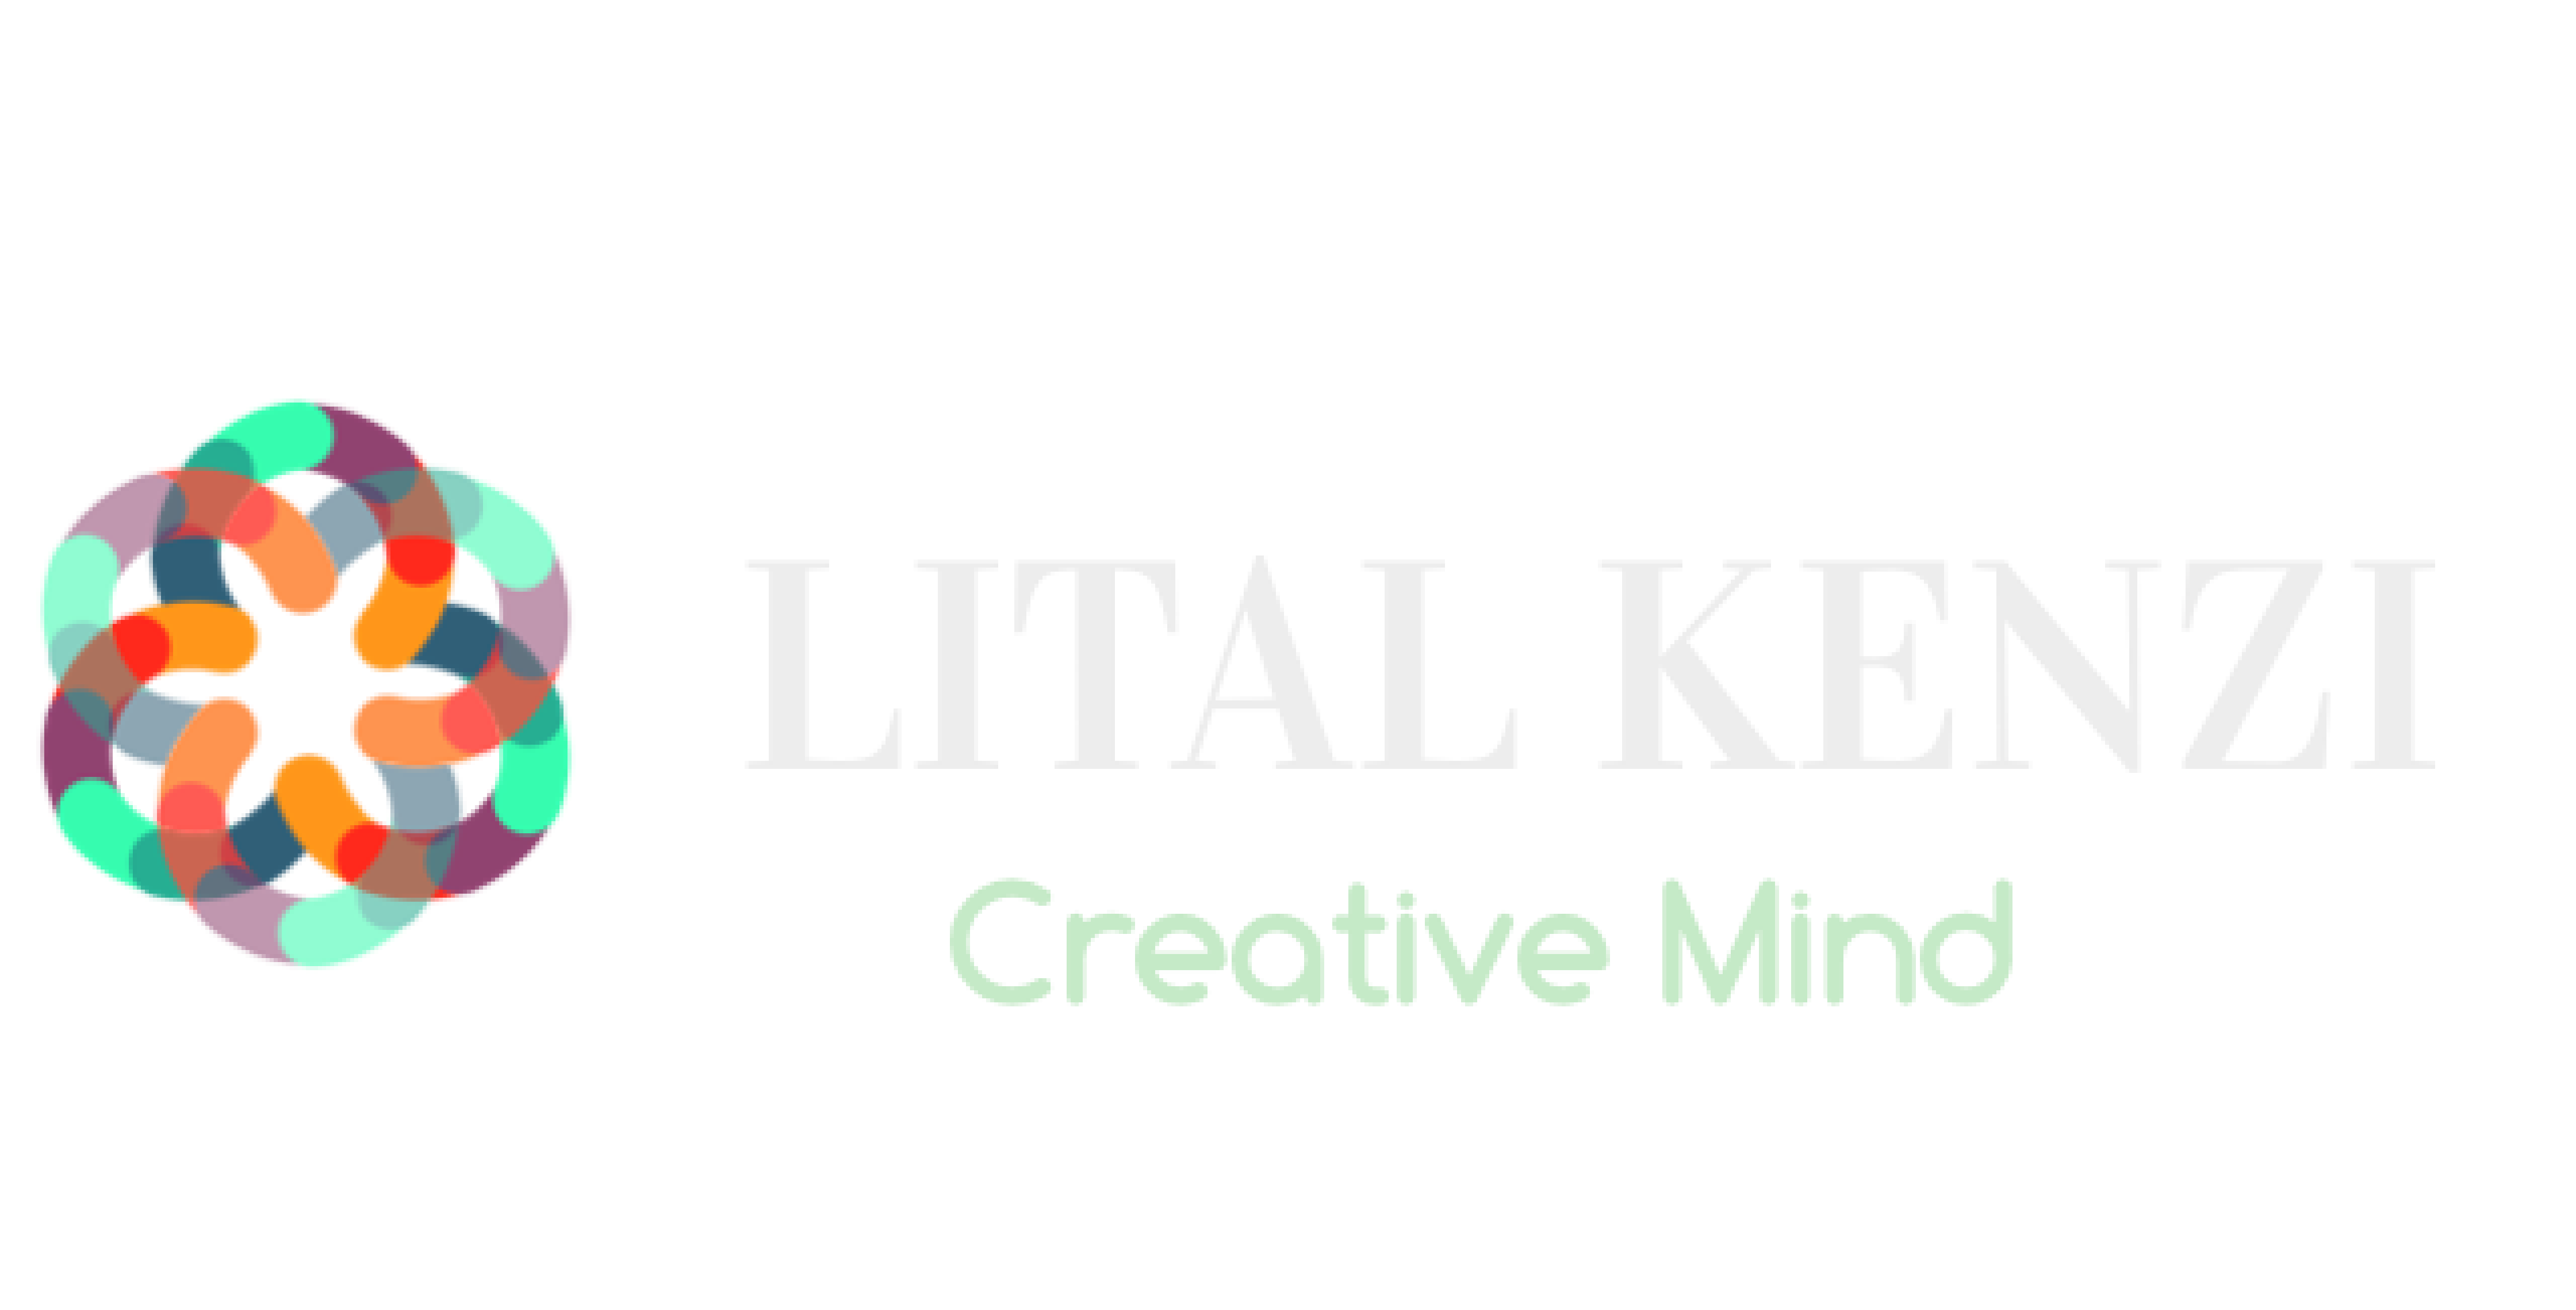 creativemind logo